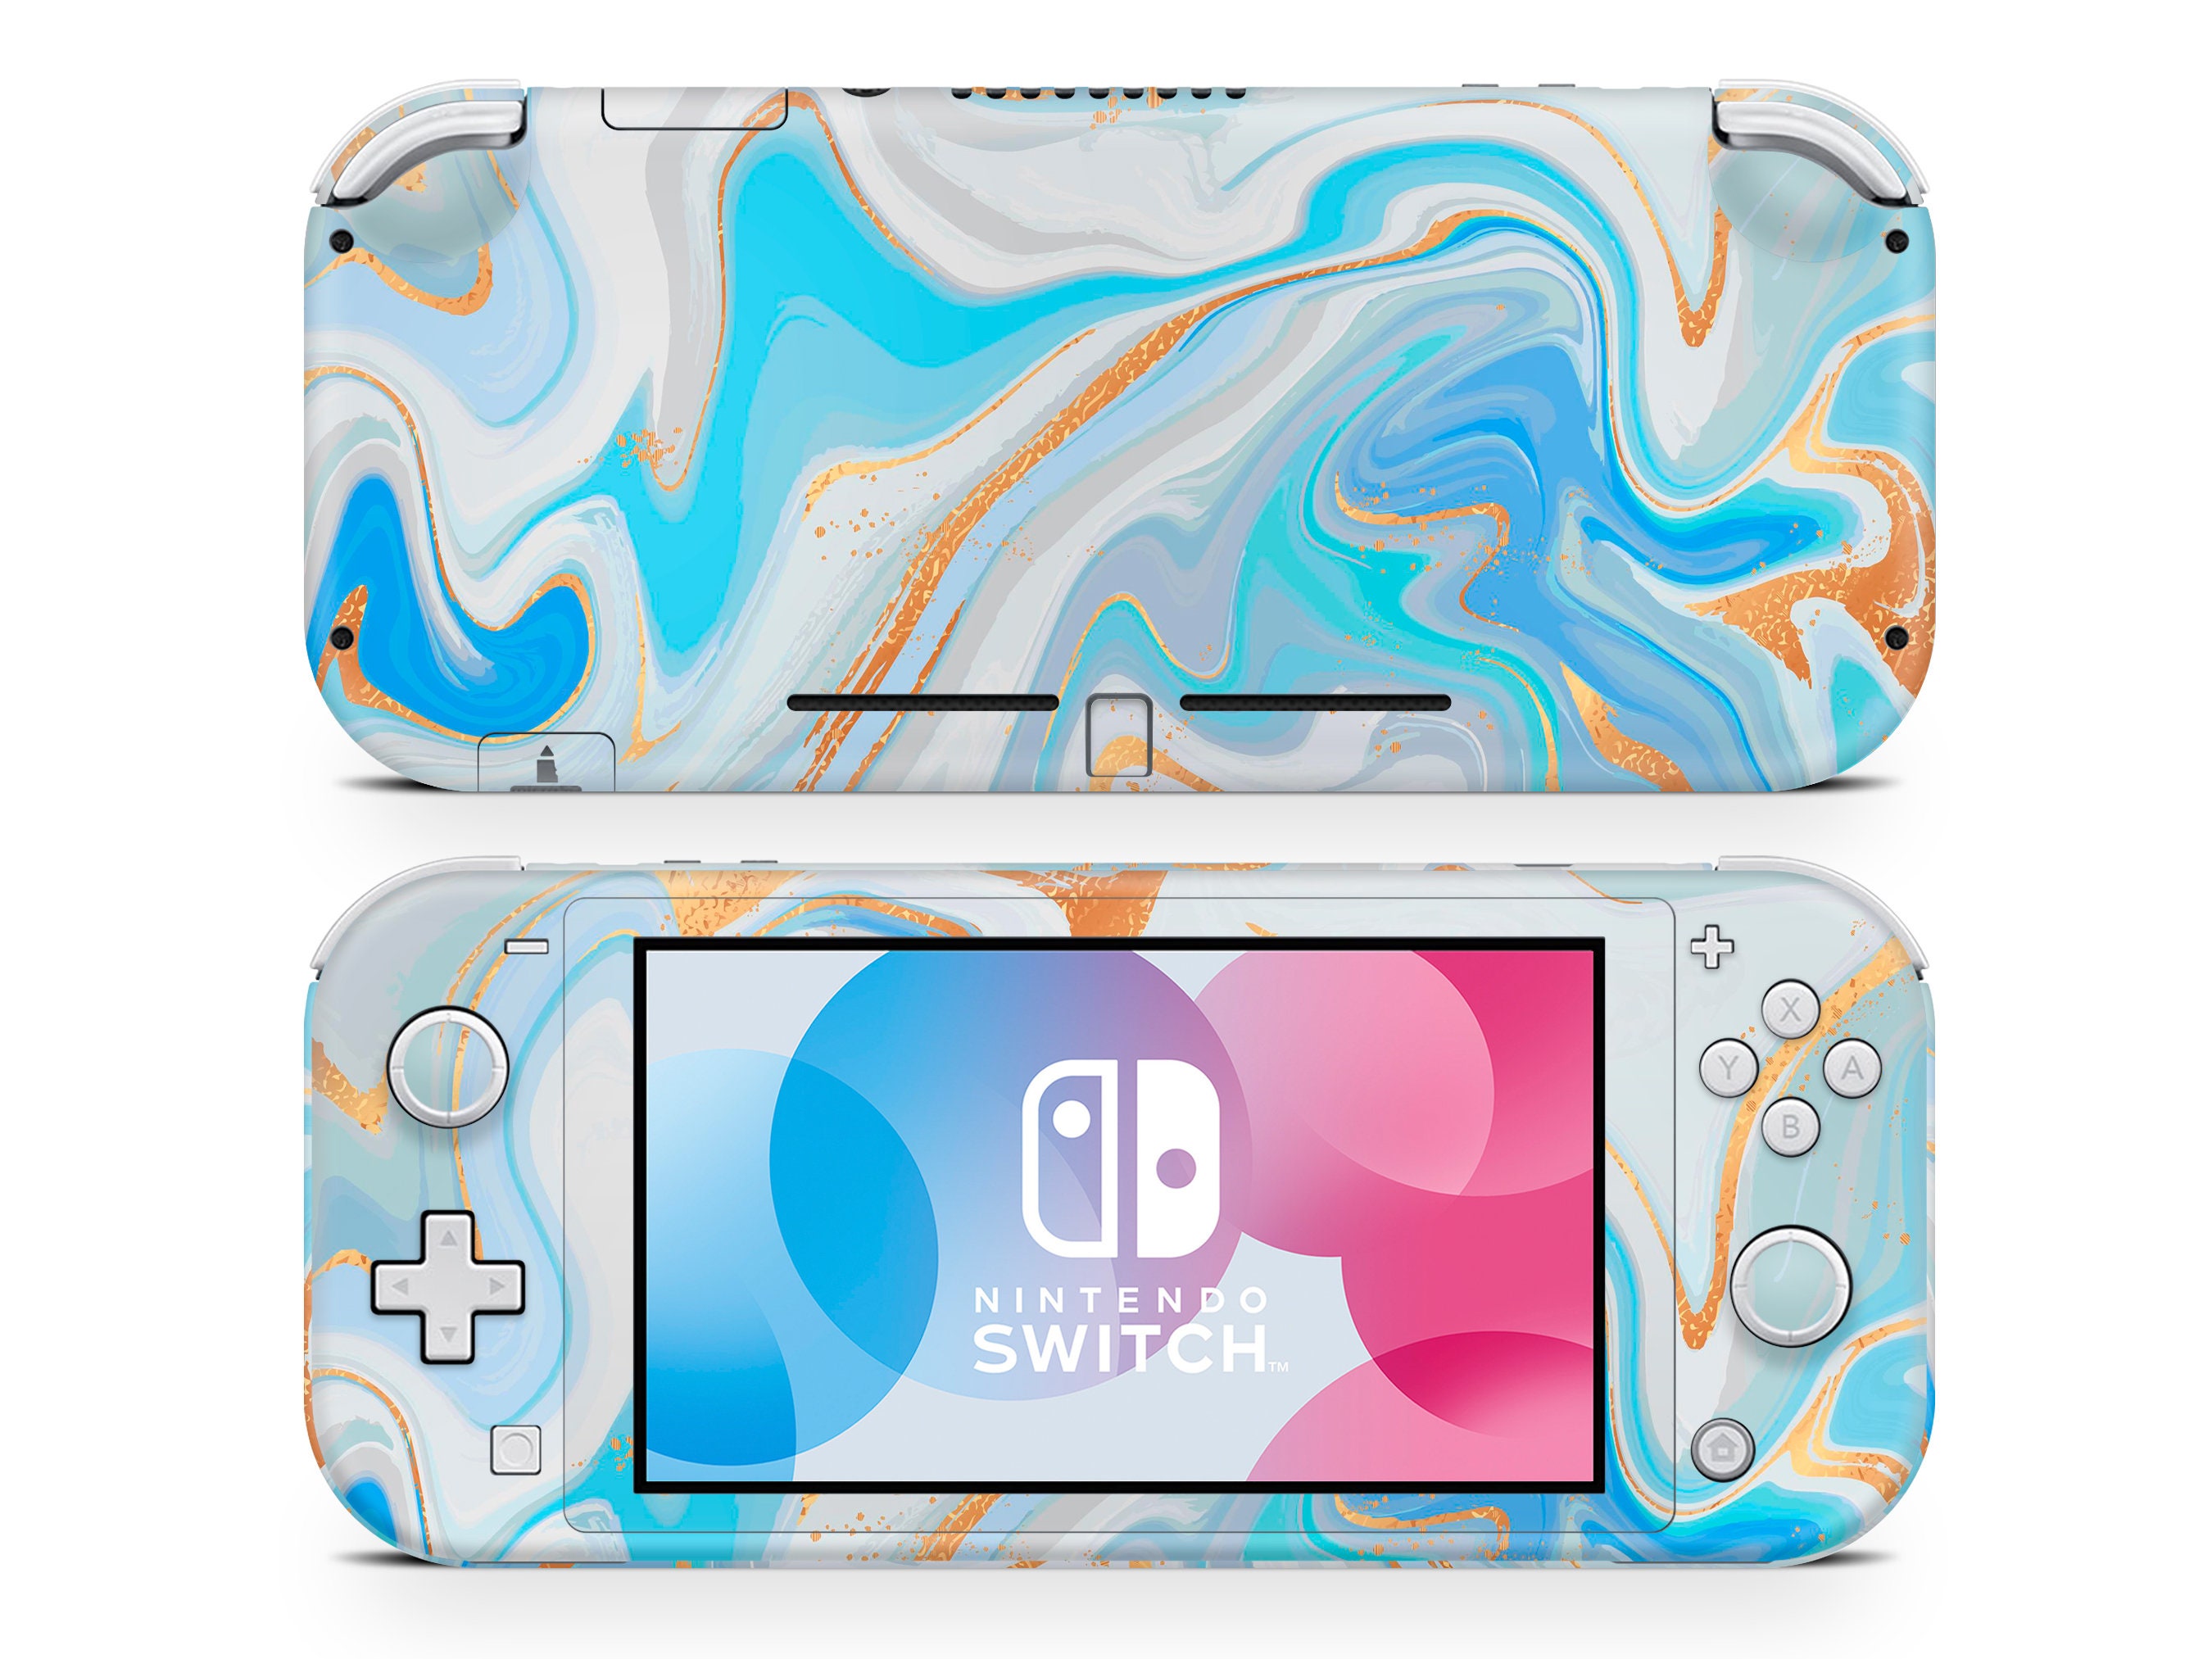 Nintendo Switch Lite Skin Wrap Premium Vinyl Blue Turquoise Marble